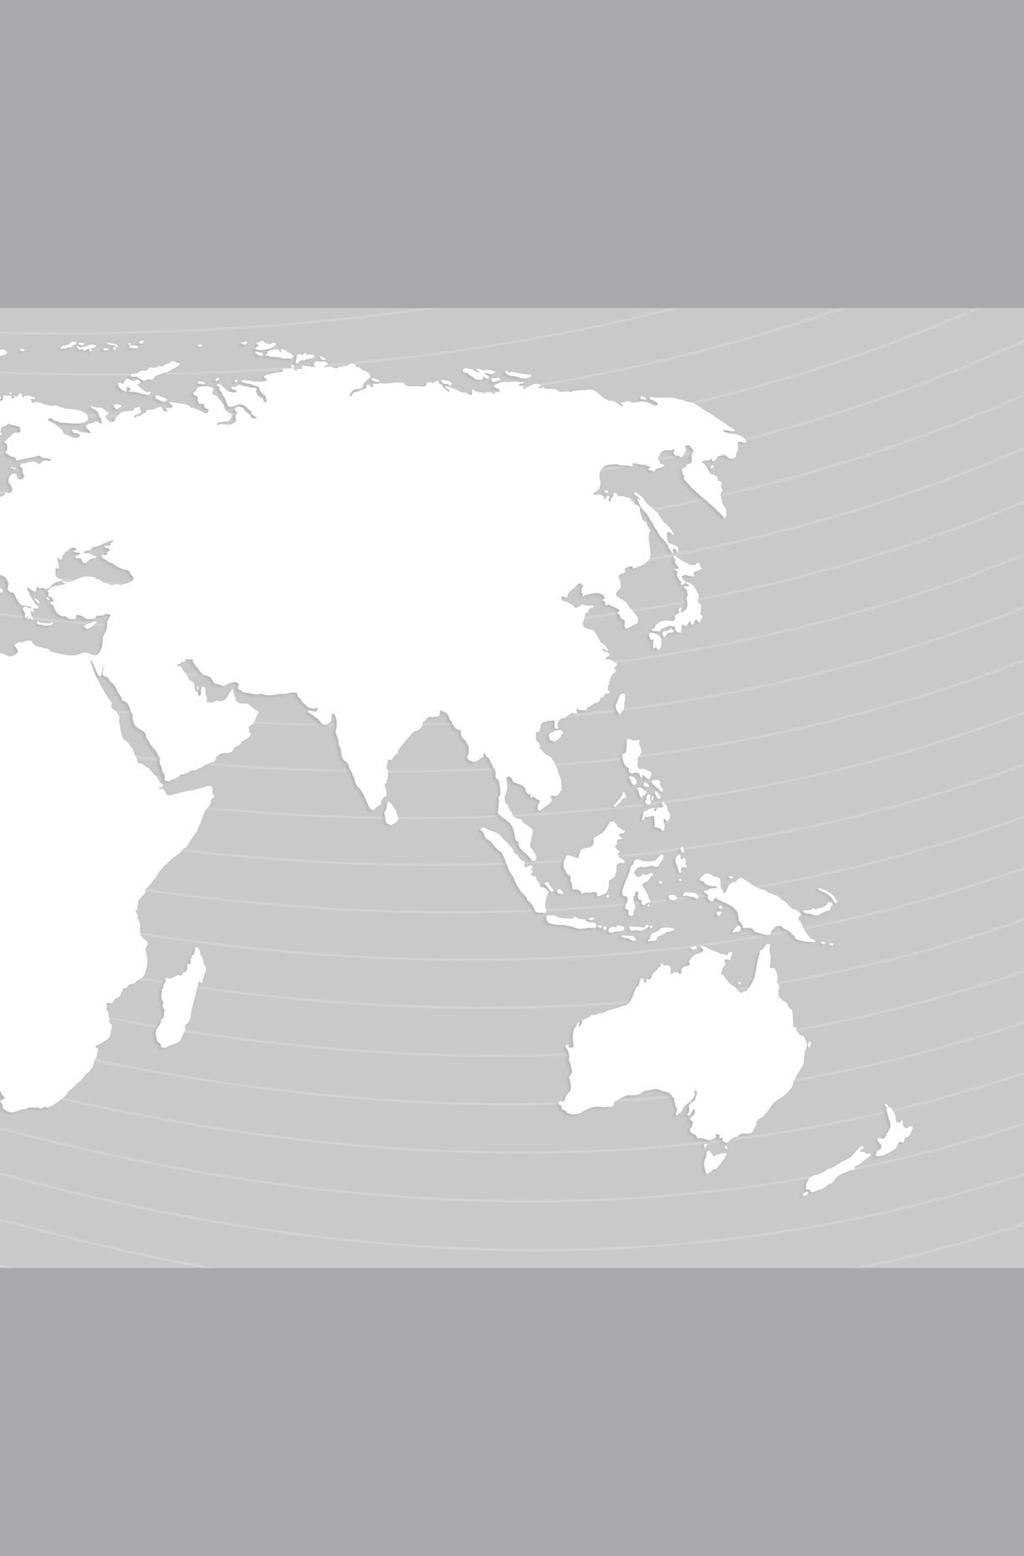 Countries where ATZ is present. Pays où est présent ATZ.